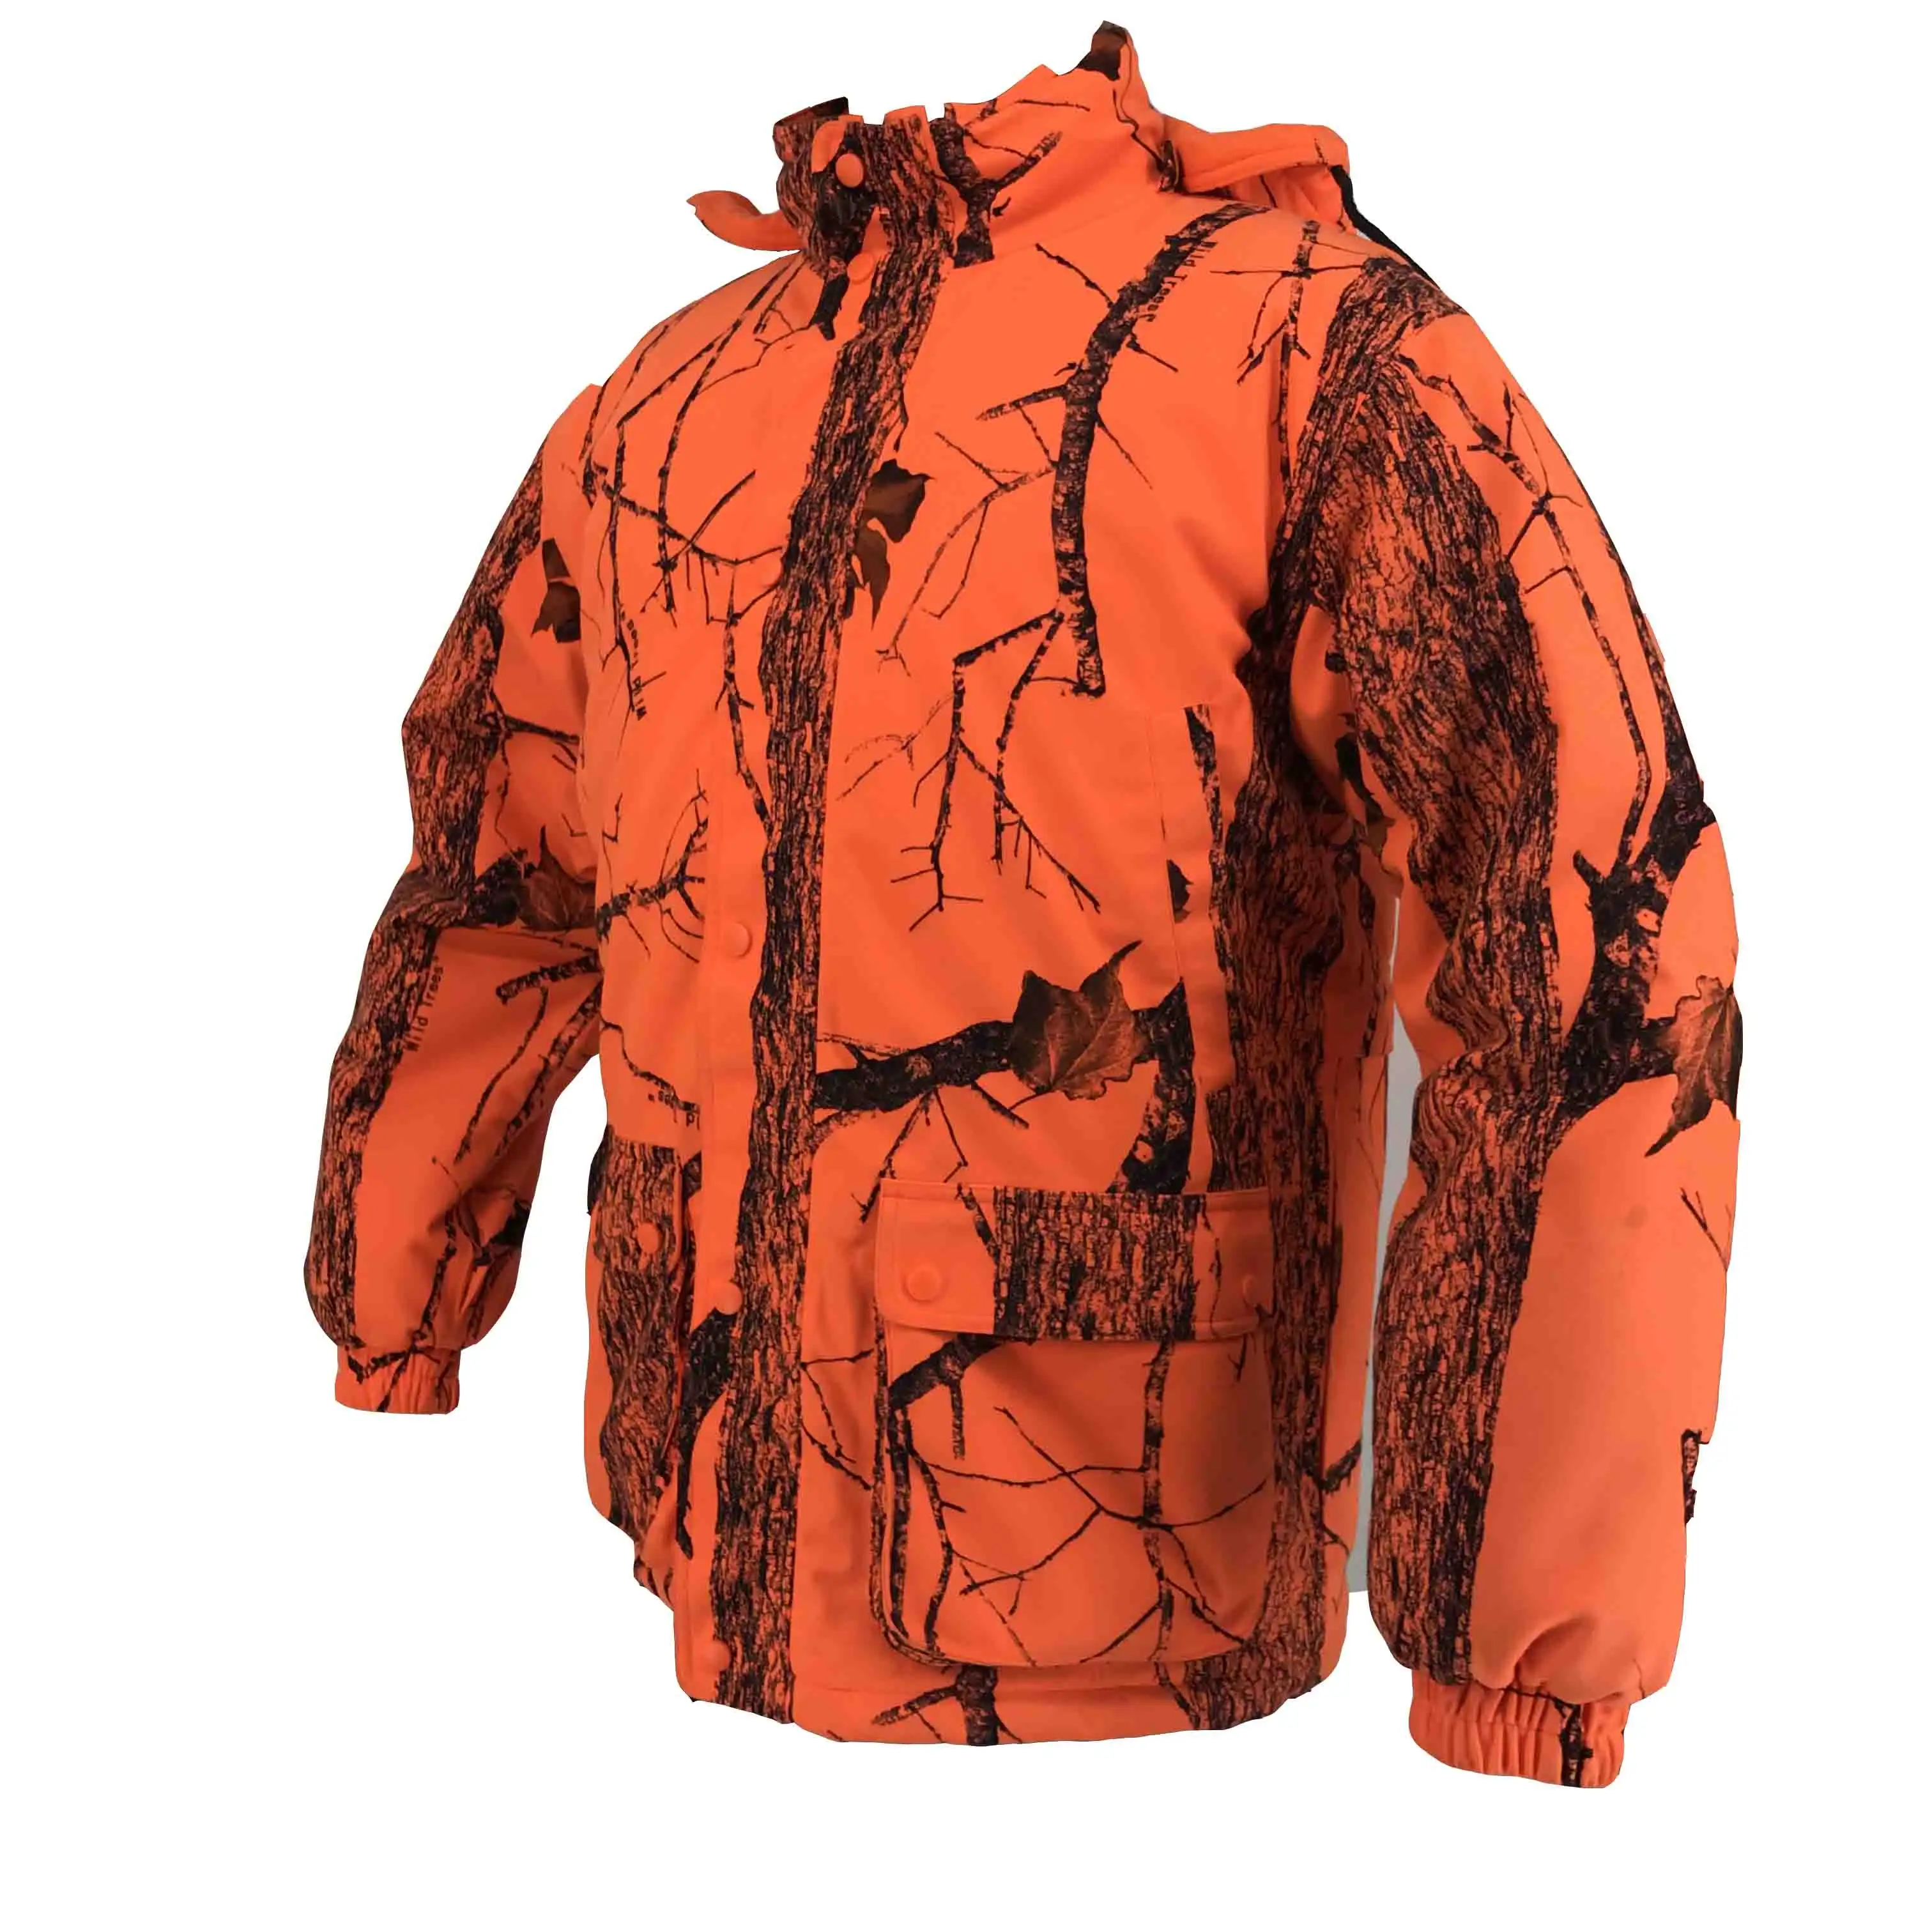 Blaze orange camo outdoor breathable hunting jacket camouflage jacket for men for hunting